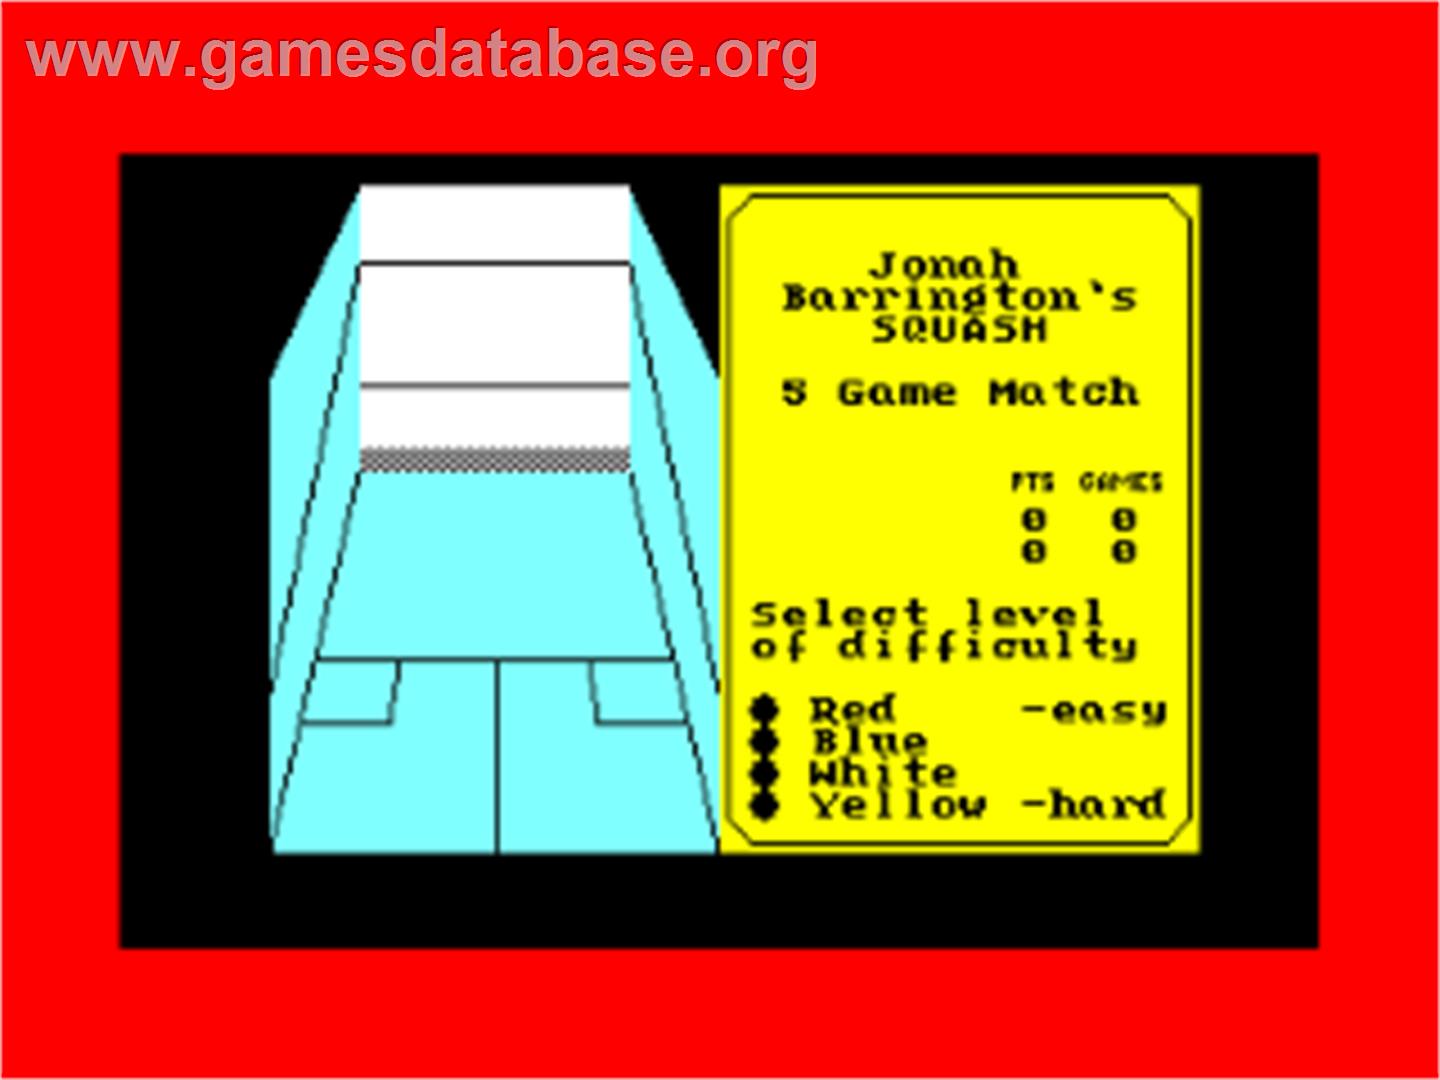 Jonah Barrington's Squash - Amstrad CPC - Artwork - Title Screen